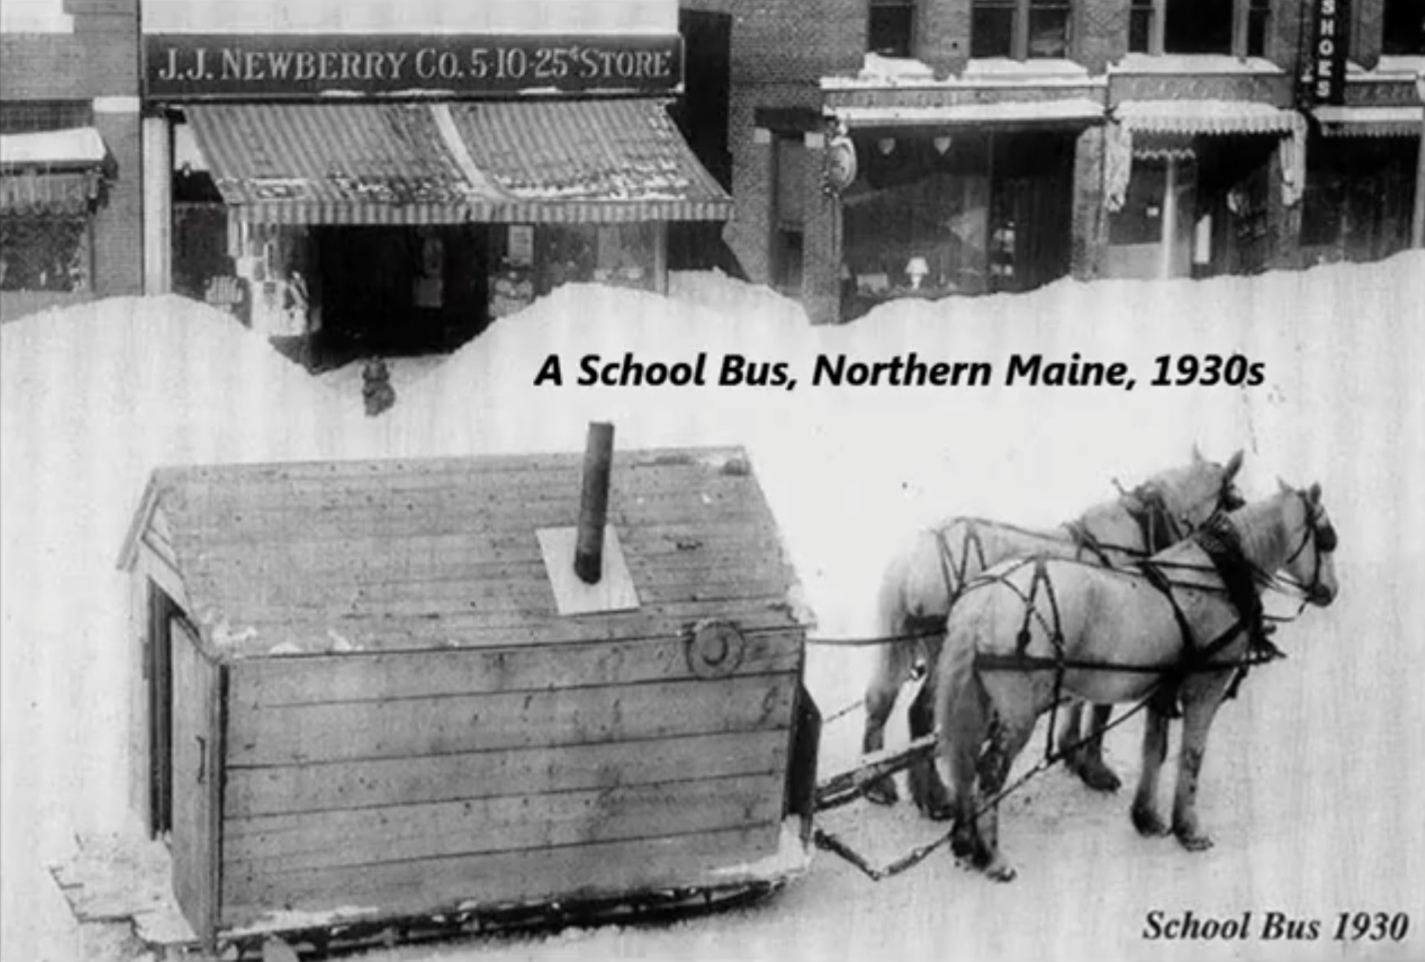 school bus 1930 maine - Mom J.J. Newberry Co.51025 Store Tri BE3393 A School Bus, Northern Maine, 1930s School Bus 1930